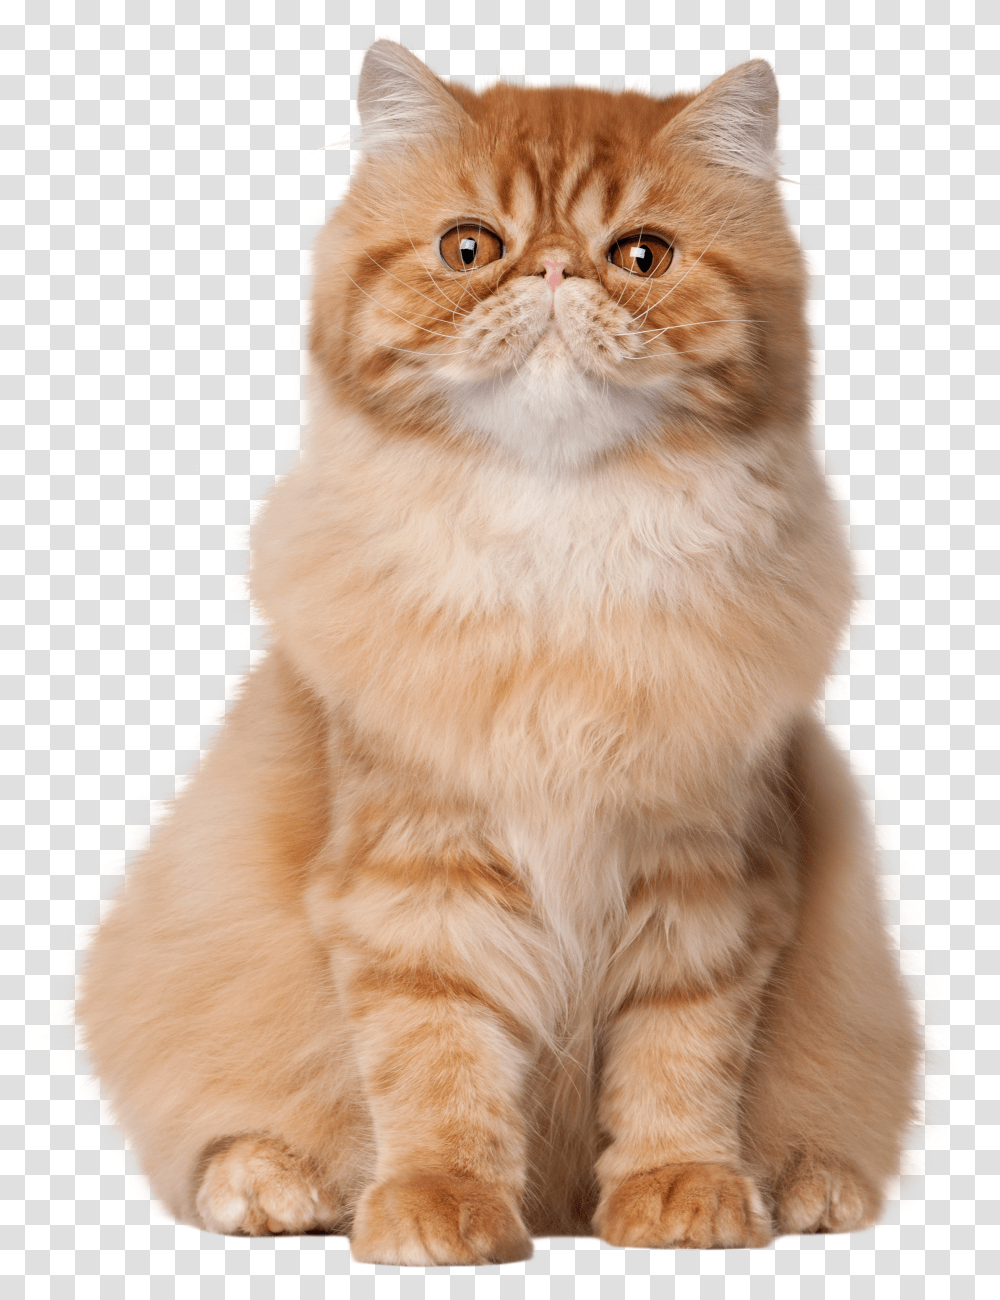 Sitting Cat Clip Art Cat Sitting Down Hd Transparent Png